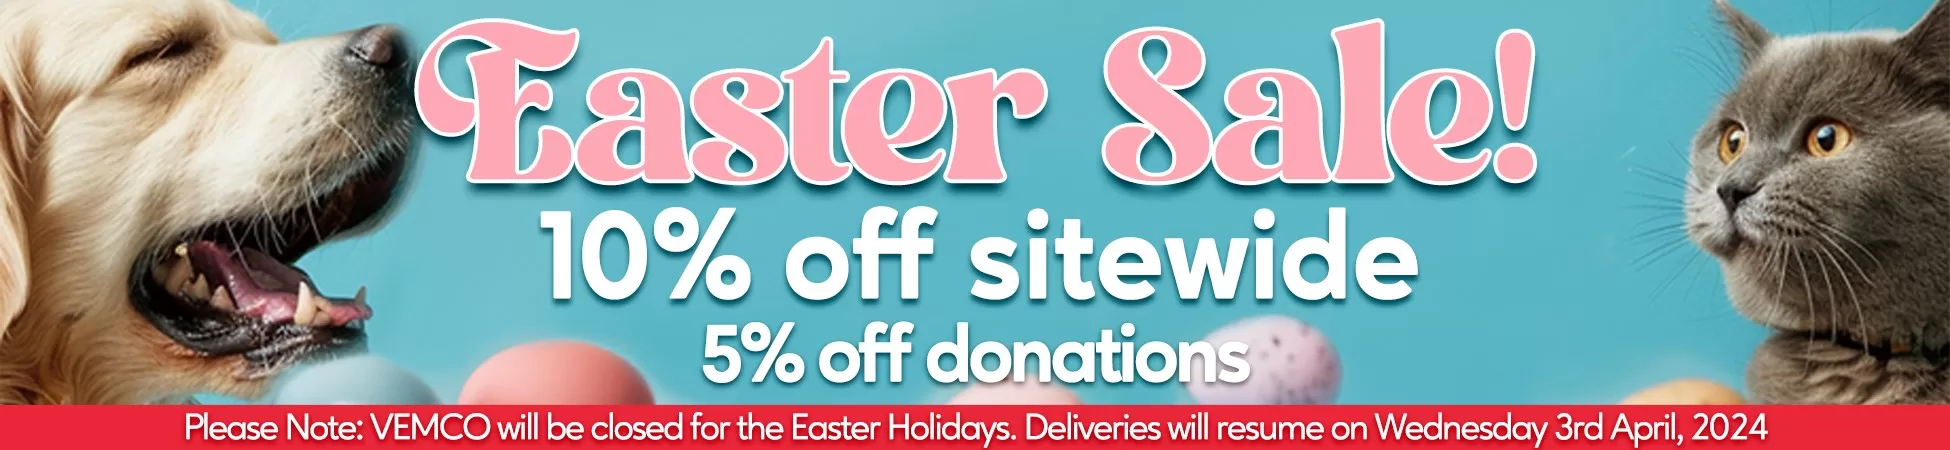 Easter sale web